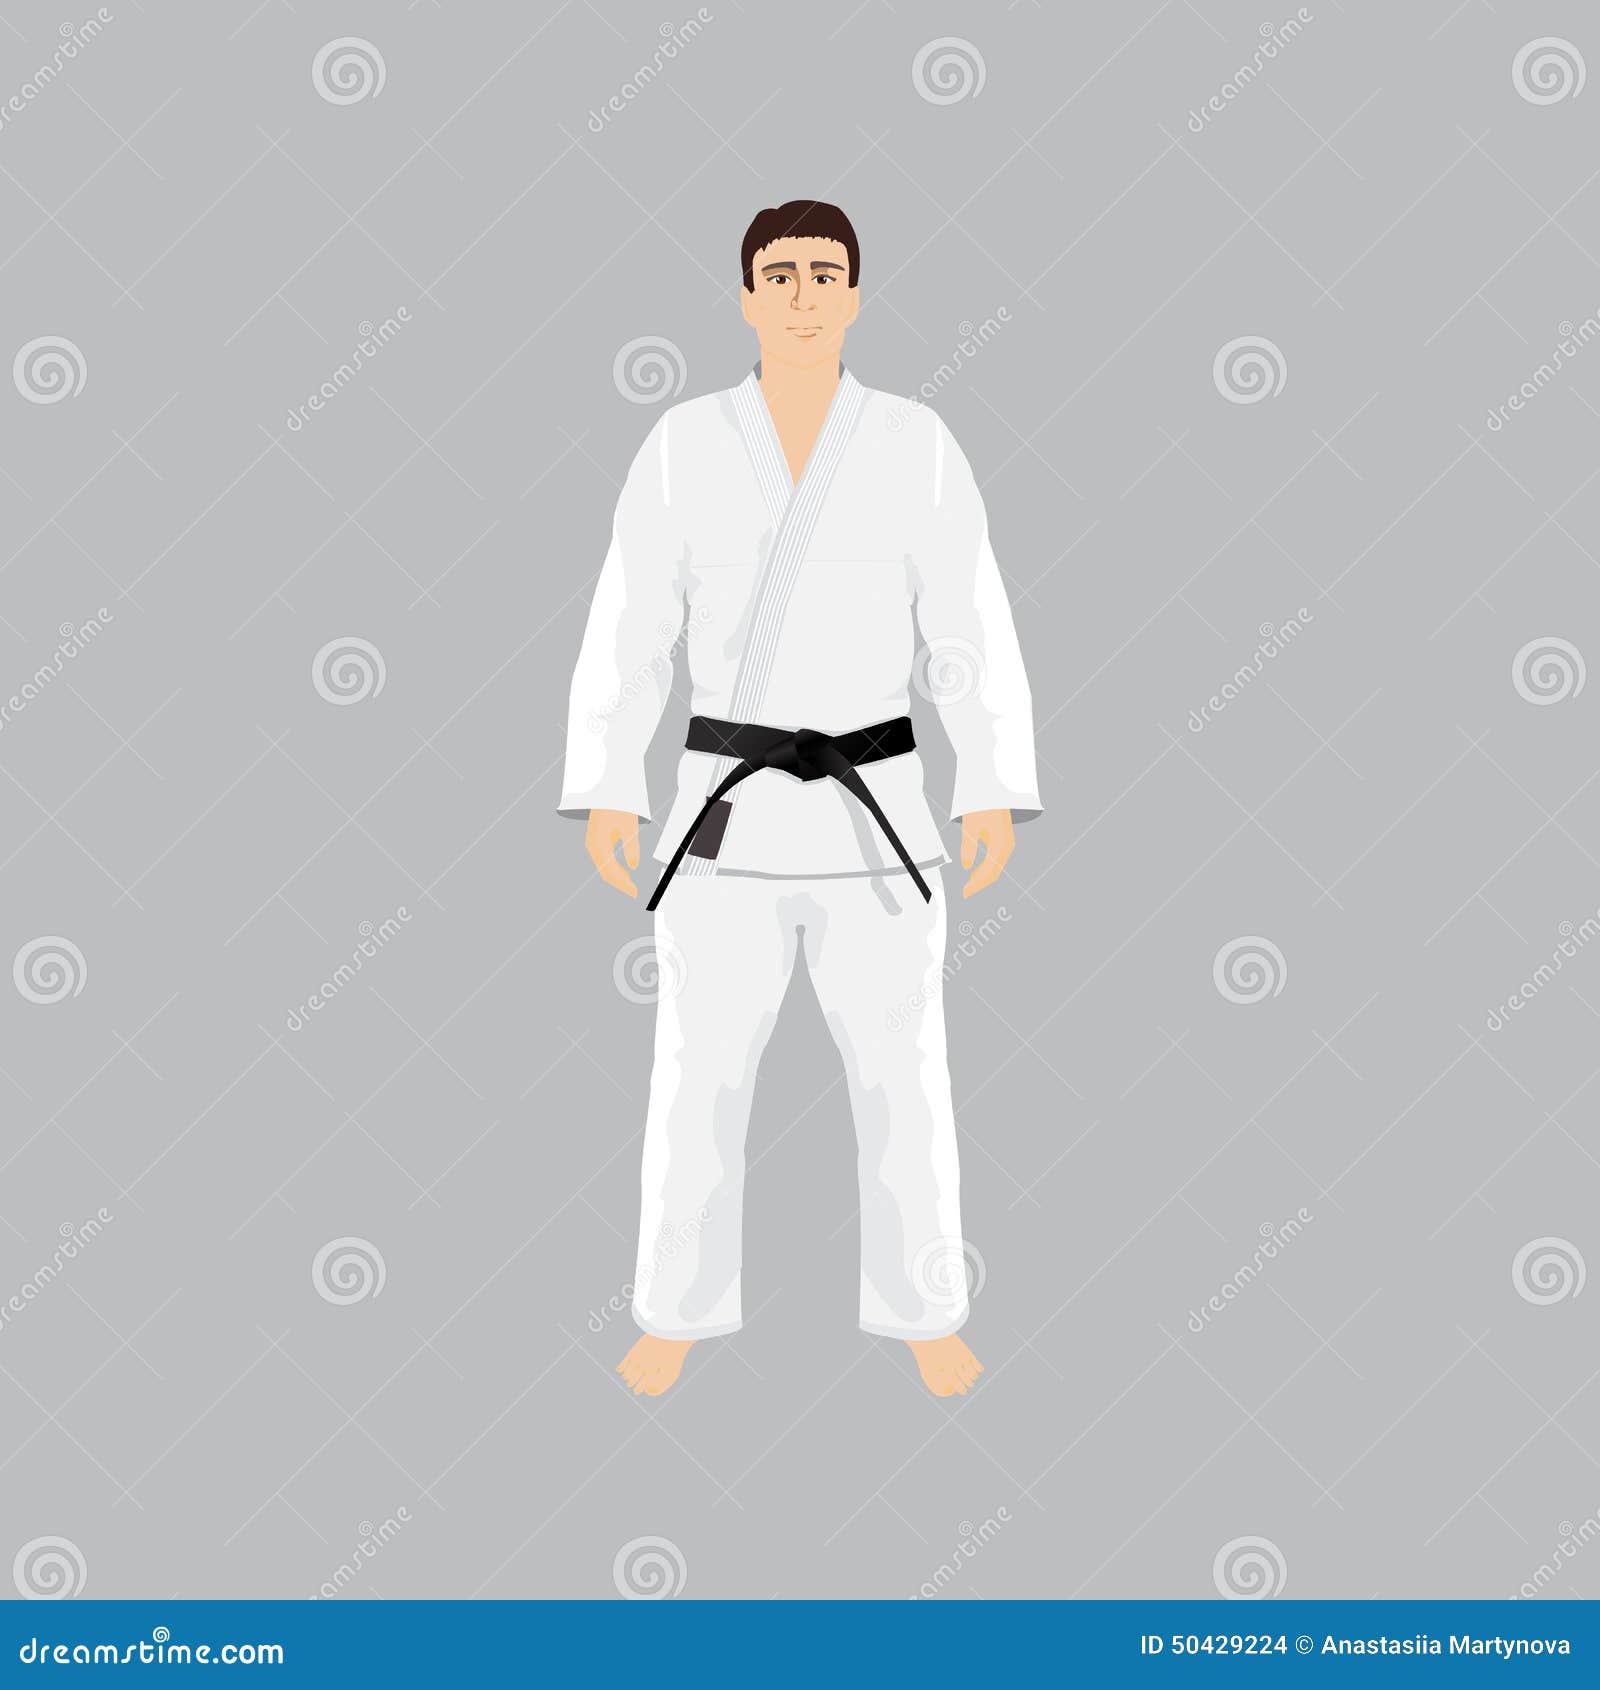 Taekwondo Martial Art Black Belt White Belt Jiu Jitsu Karate Poster 